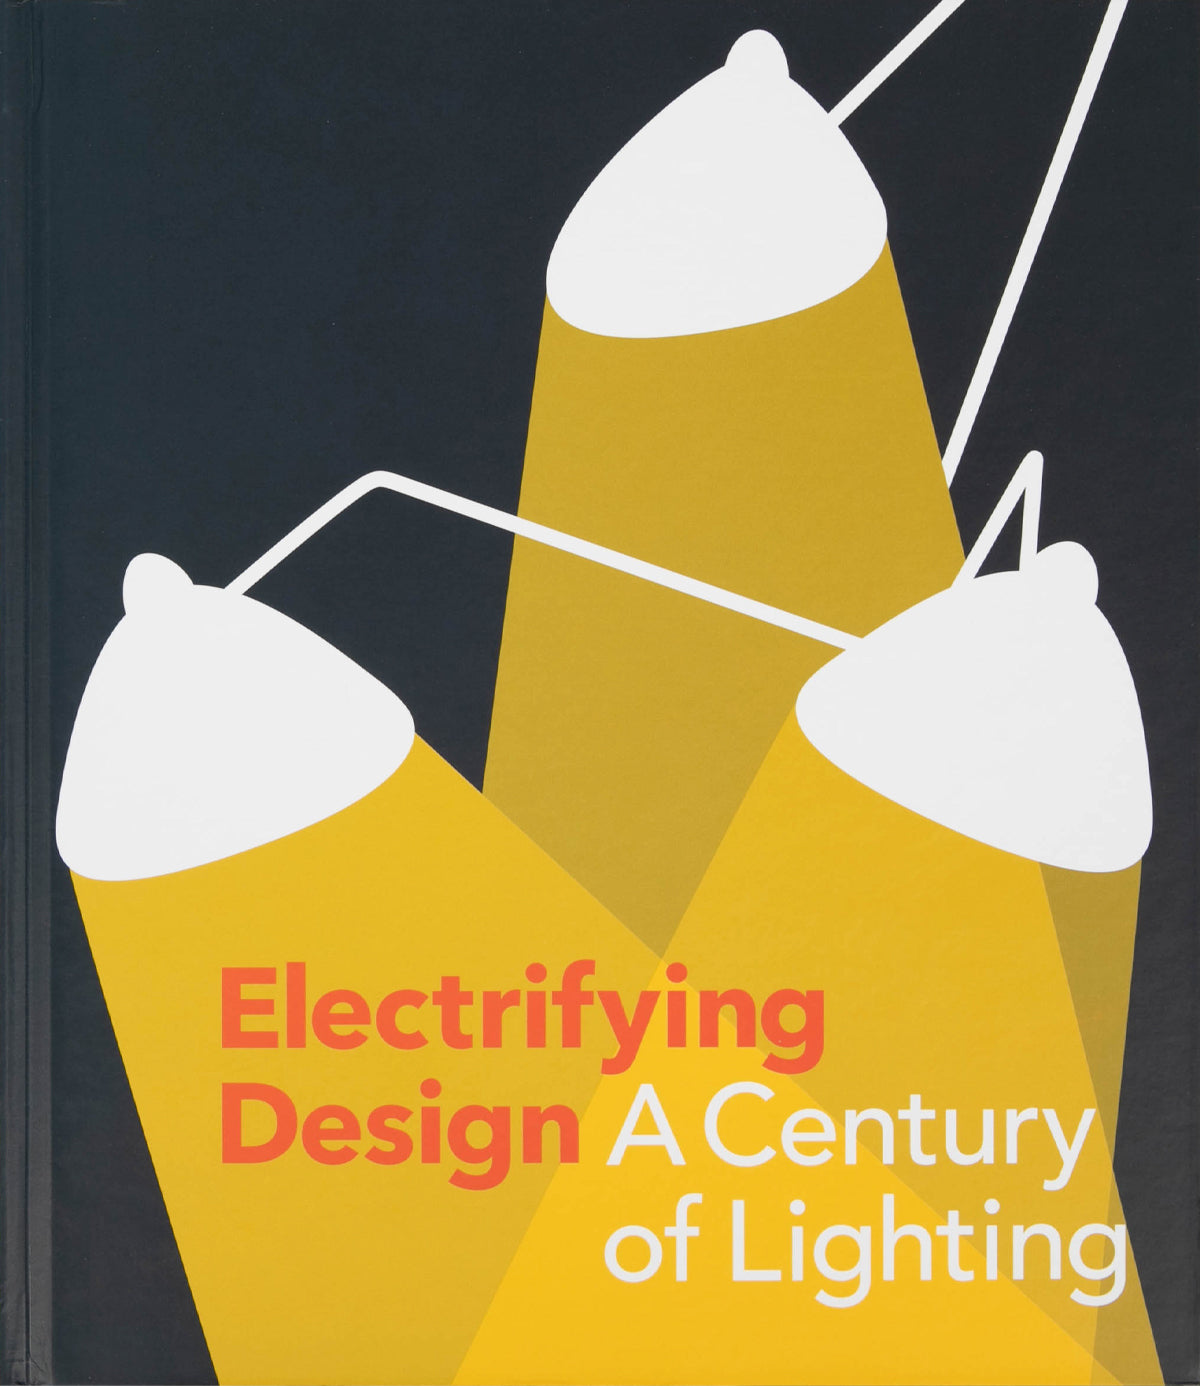 Electrifying Design: A Century of Lighting